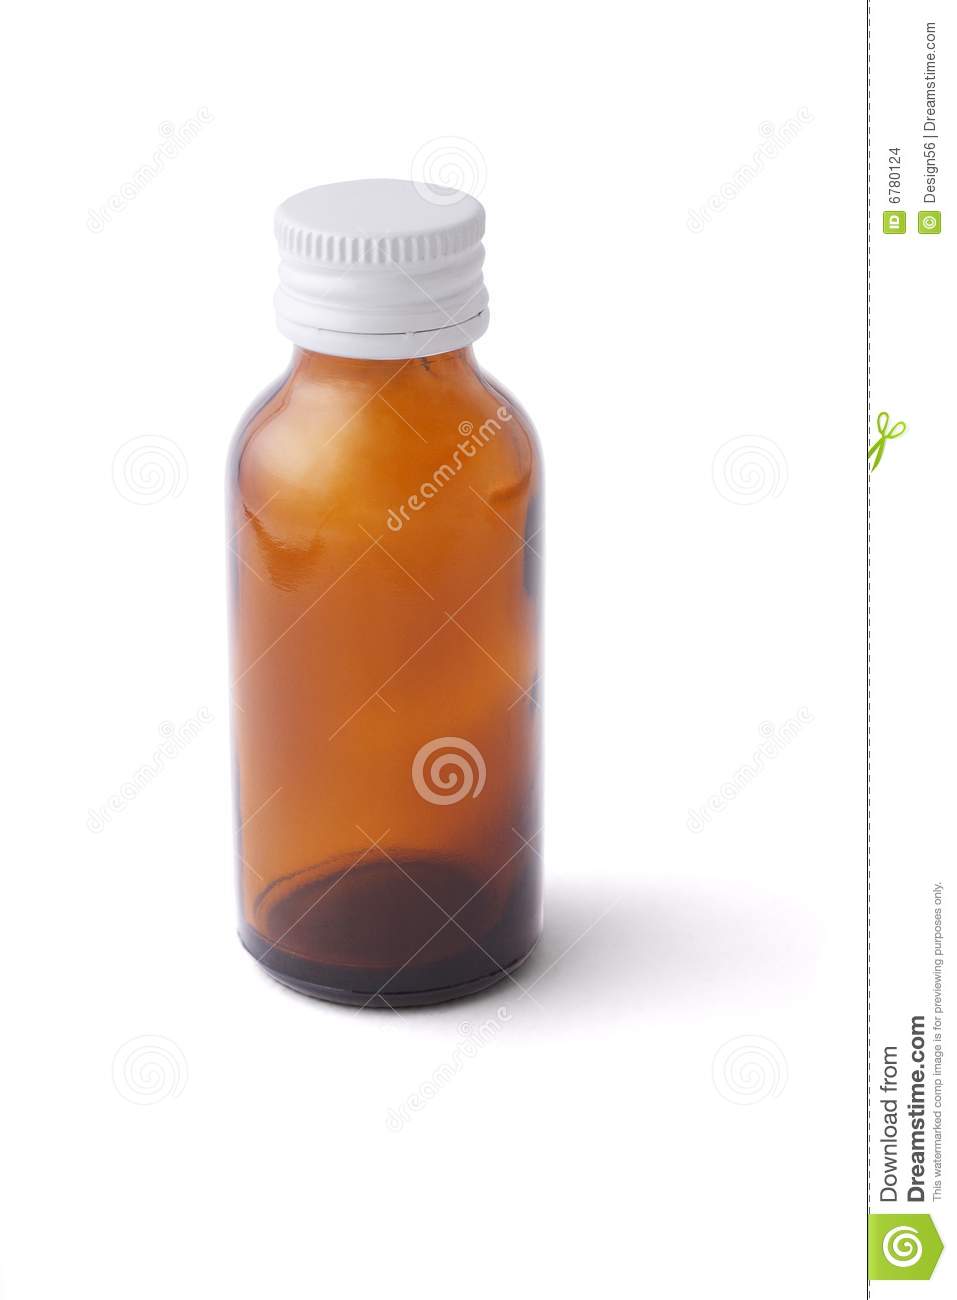 Empty Medicine Bottle With White Cap On White Background